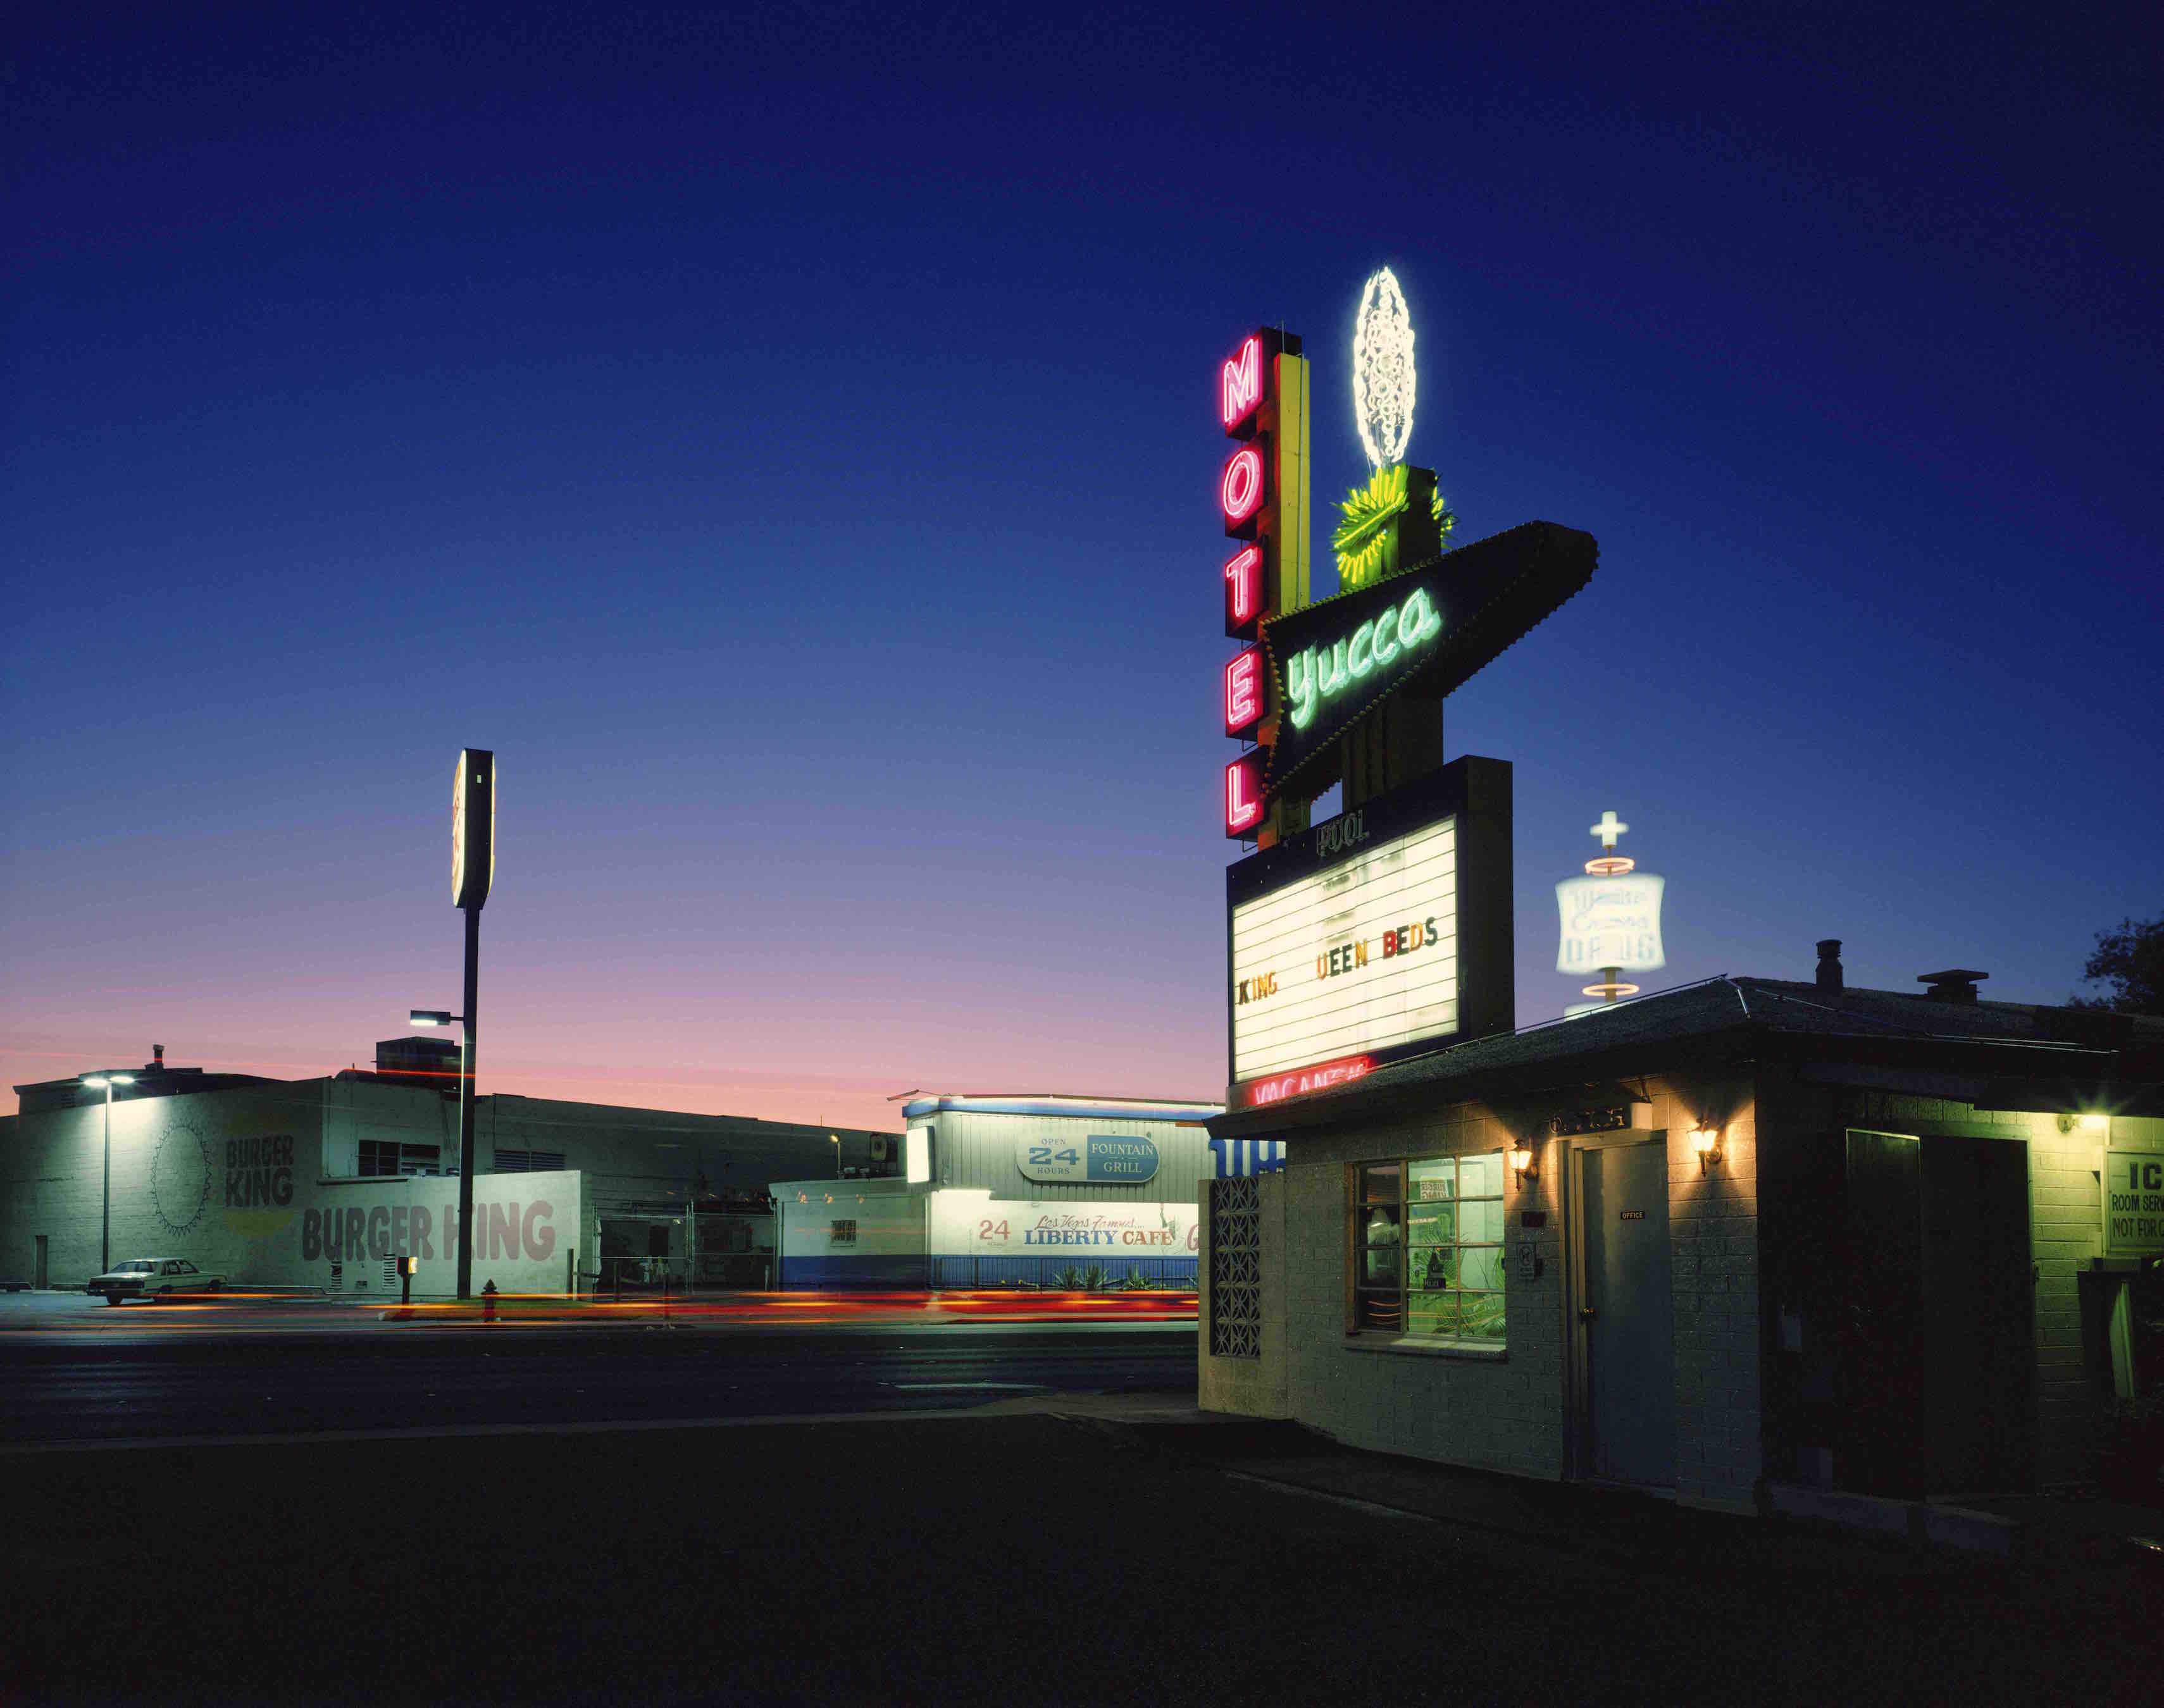 Motel Vegas by Fred Sigman (Smallworks Press)